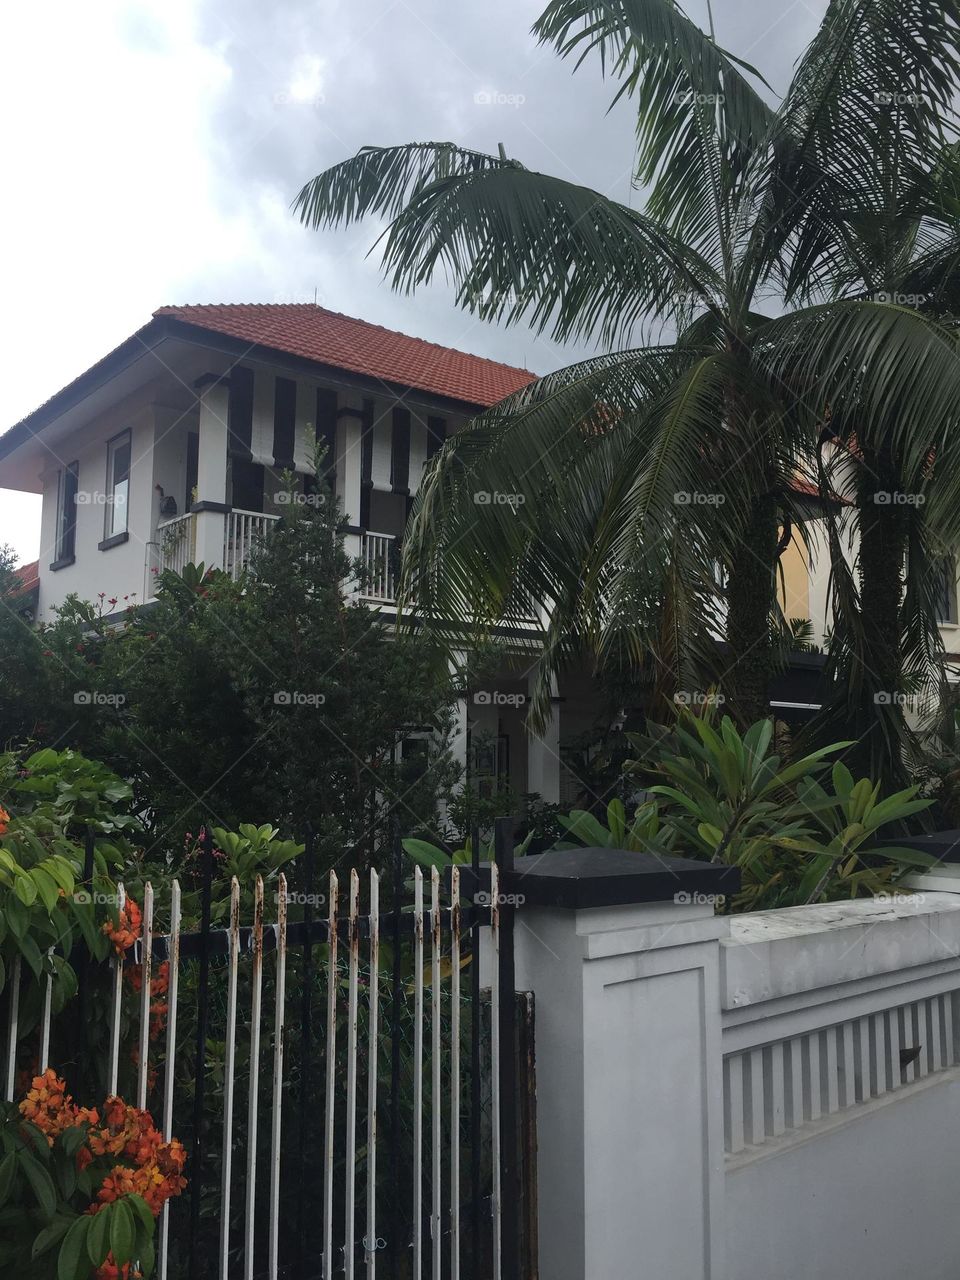 B&W “Colonial Bungalow” at Siglap Terrace